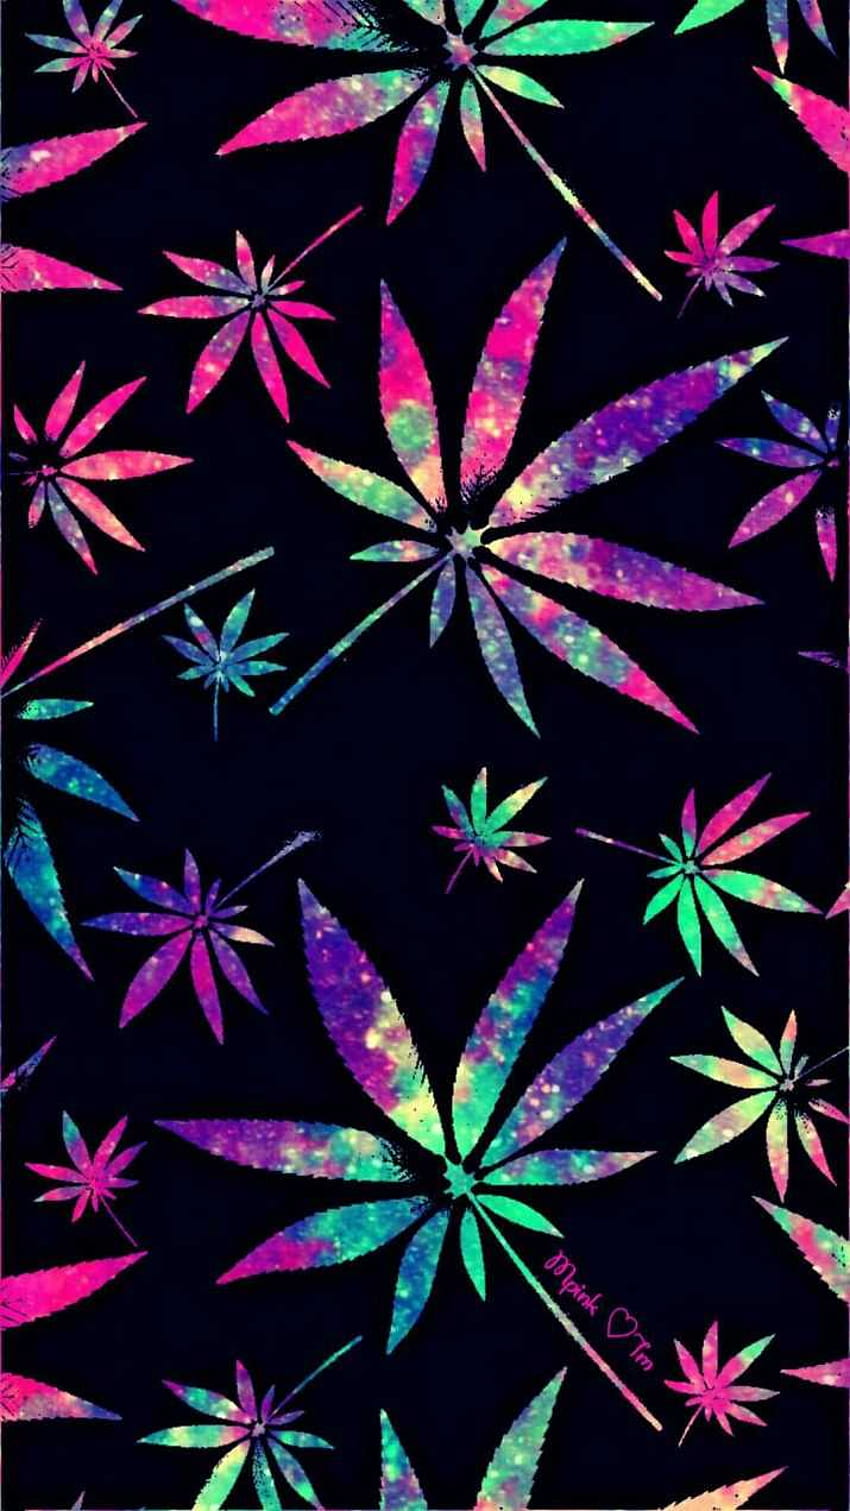 A colorful marijuana leaf pattern on black background - Weed